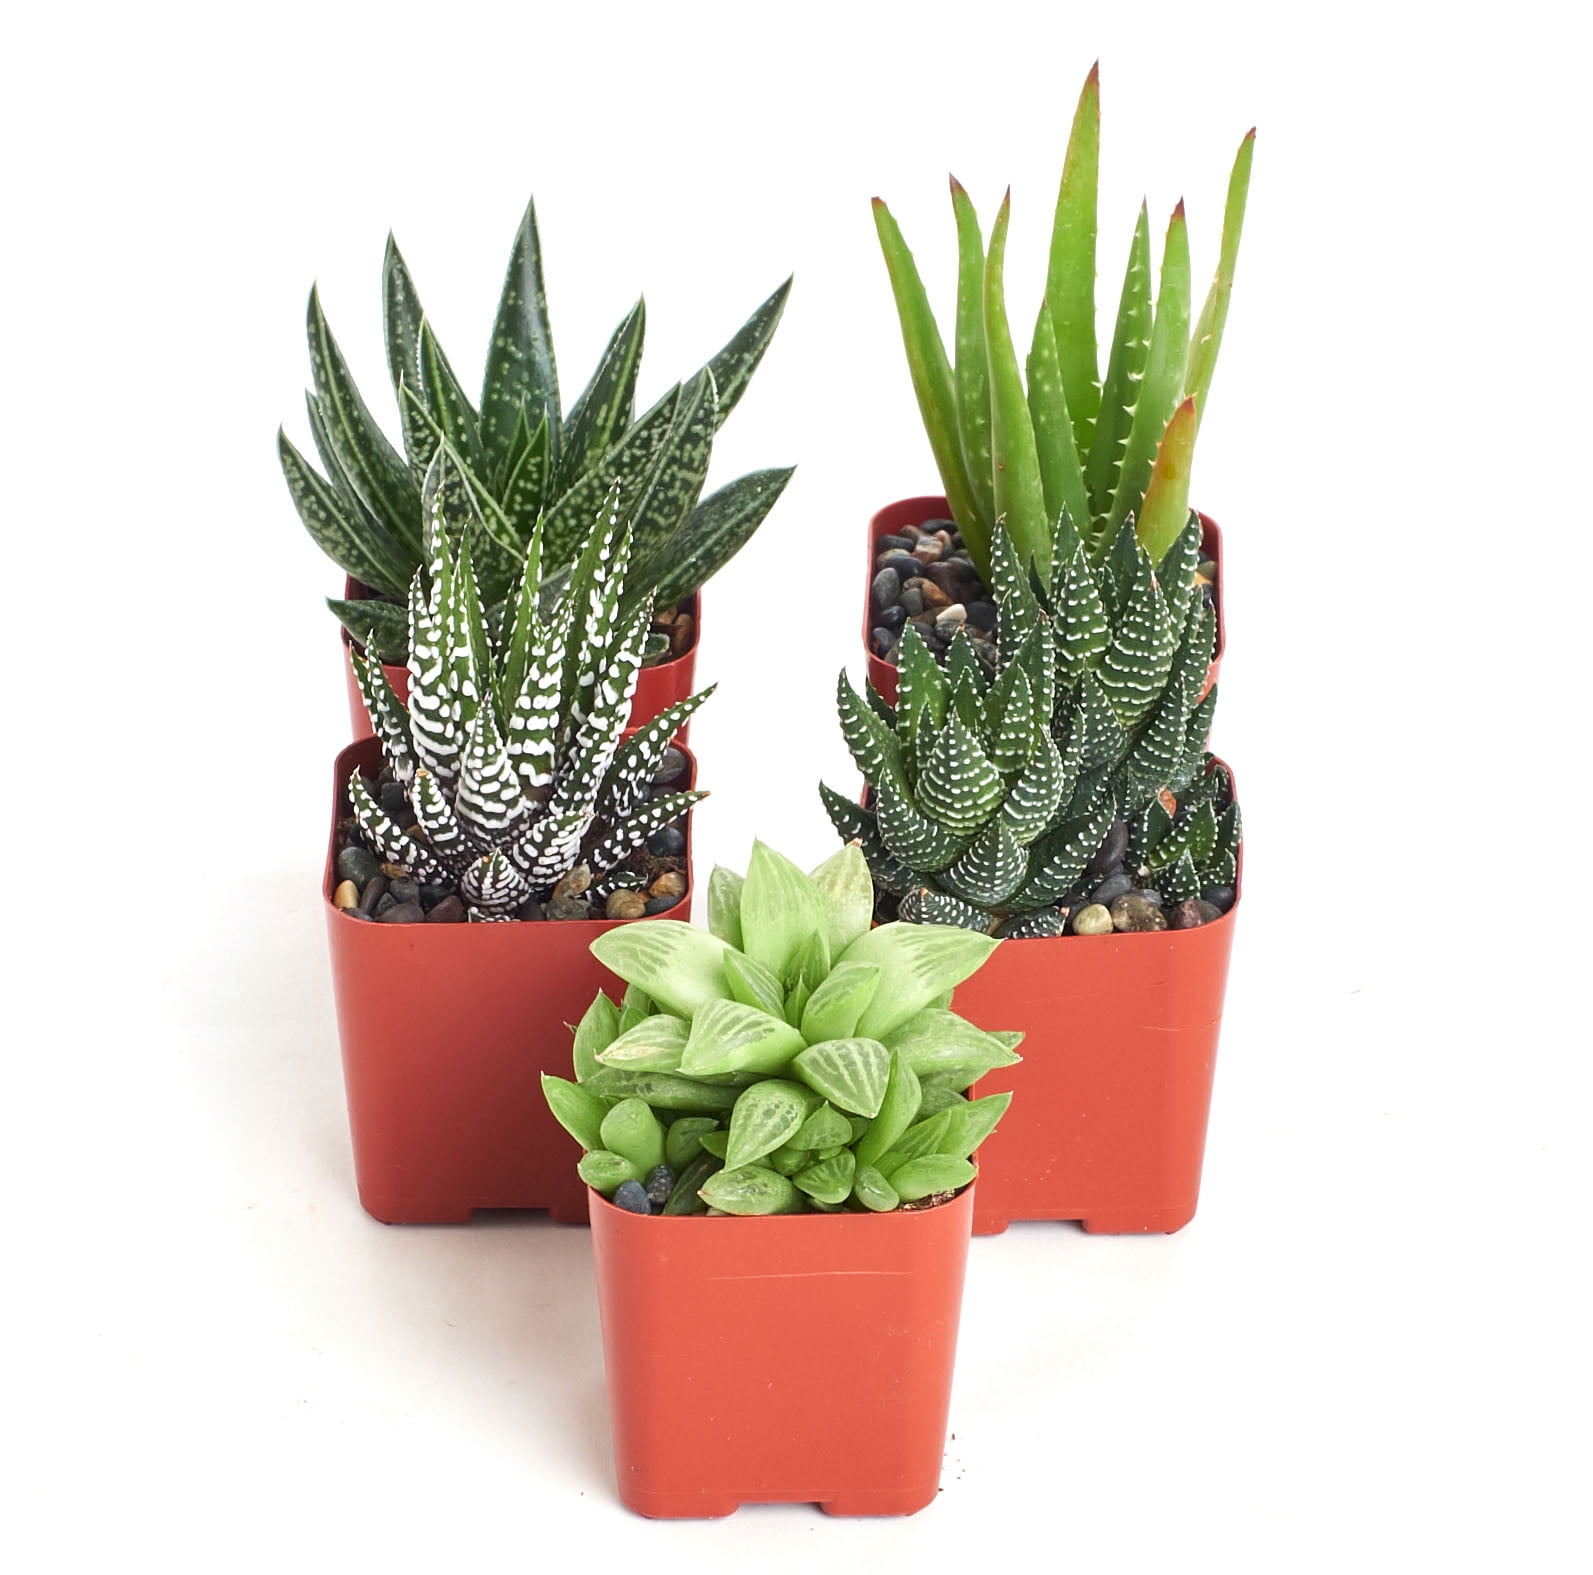 5x Aloe Vera Medicinal Organic Succulent Live Plant Natural Leafs Fresh Home Fit